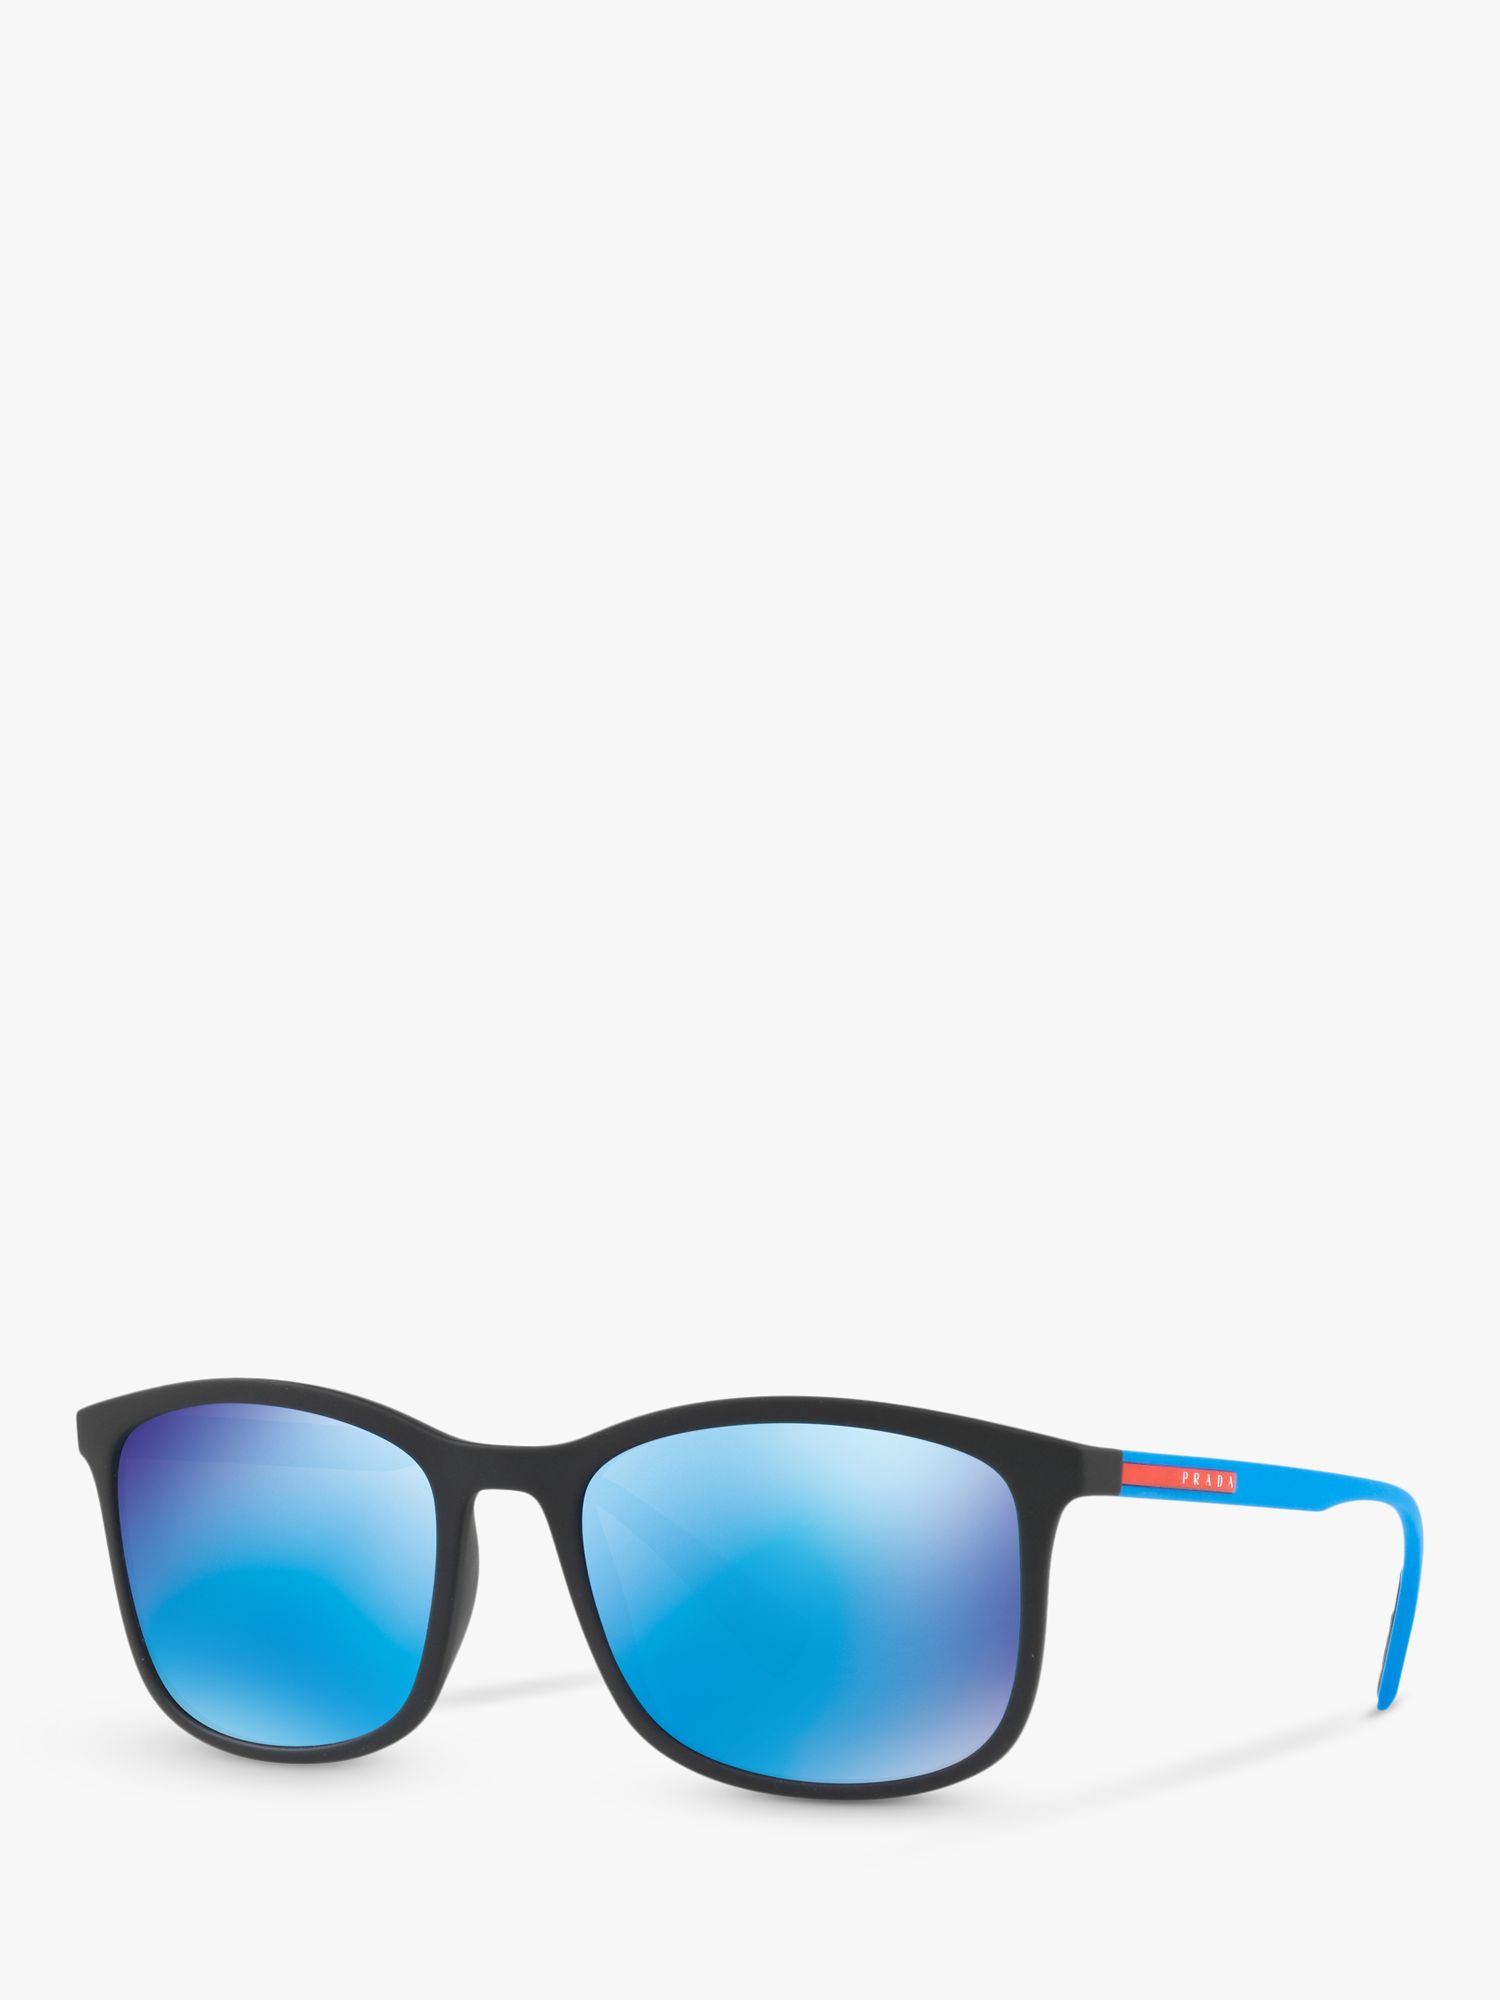 Prada Linea Rossa PS 01TS Men's Rectangular Sunglasses, Black Blue/Mirror  Turquoise